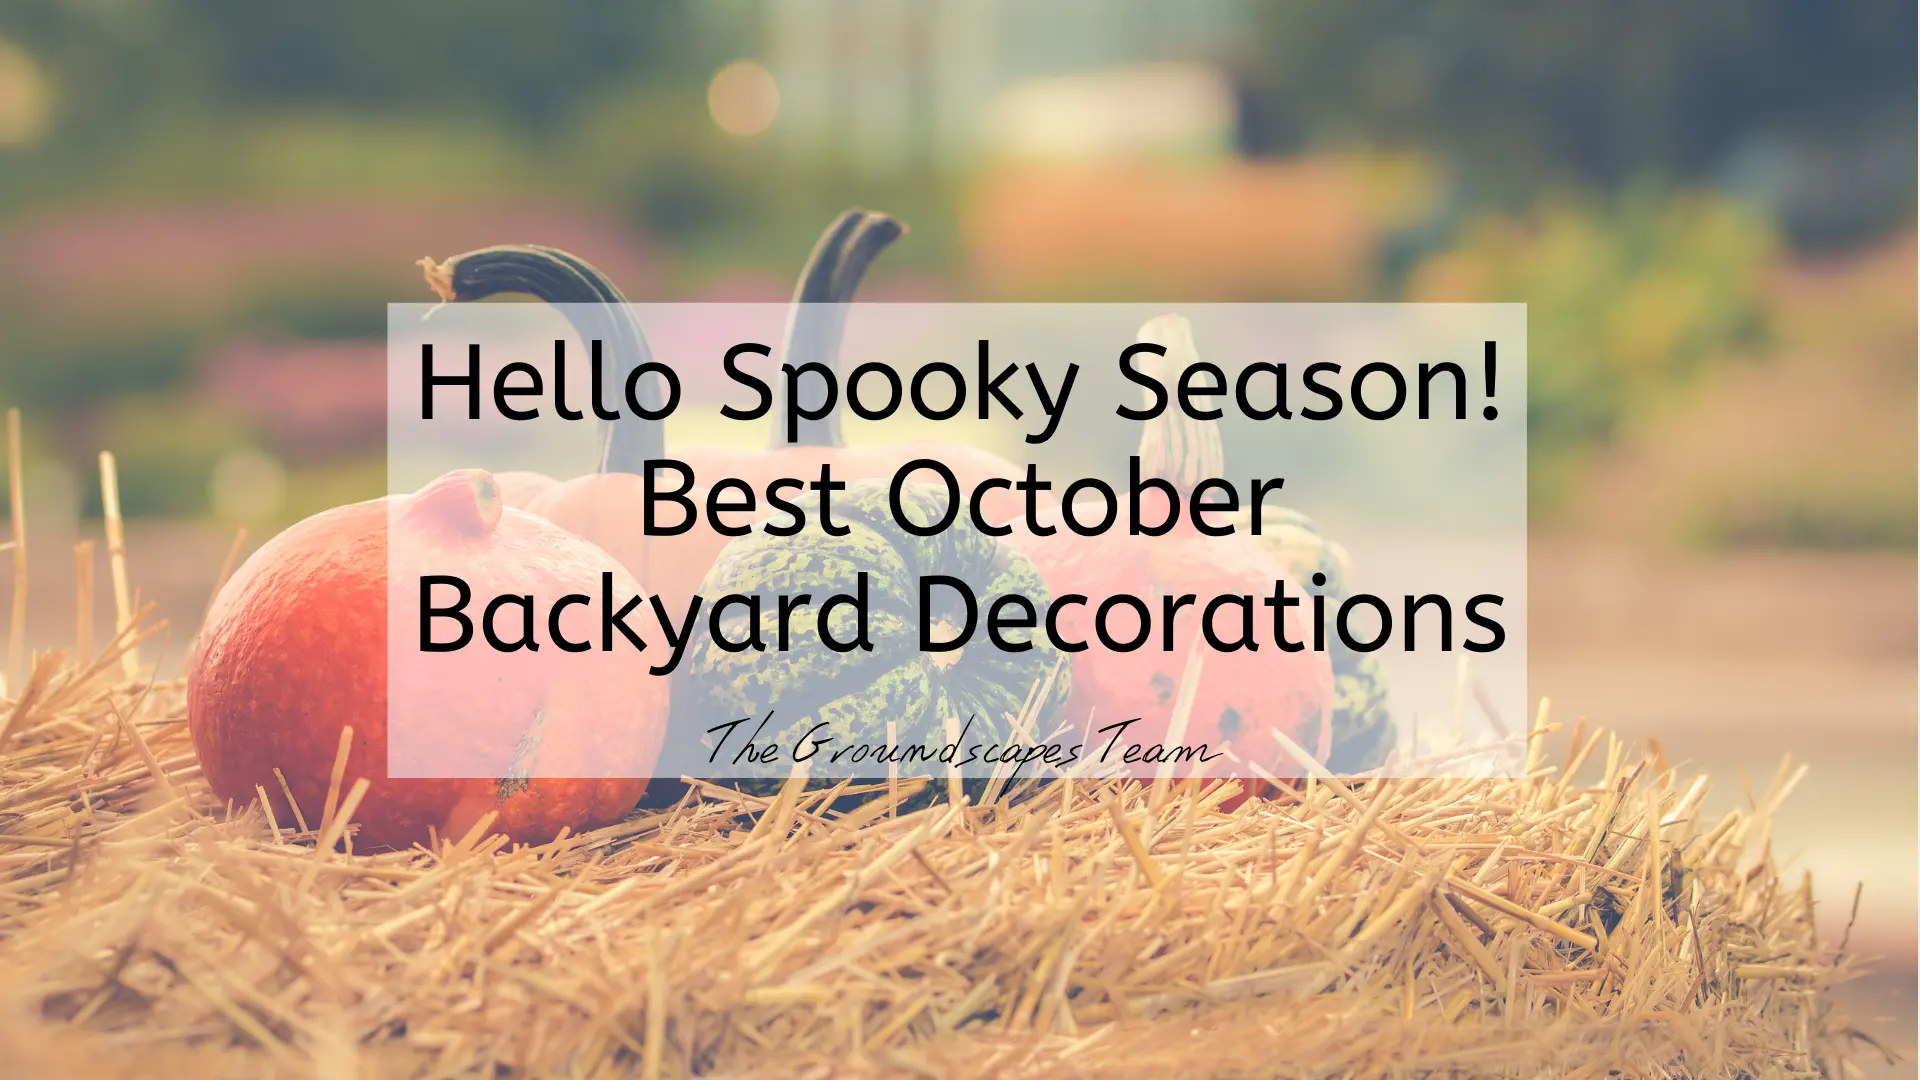 Hello Spooky Season! Best October Backyard Decorations